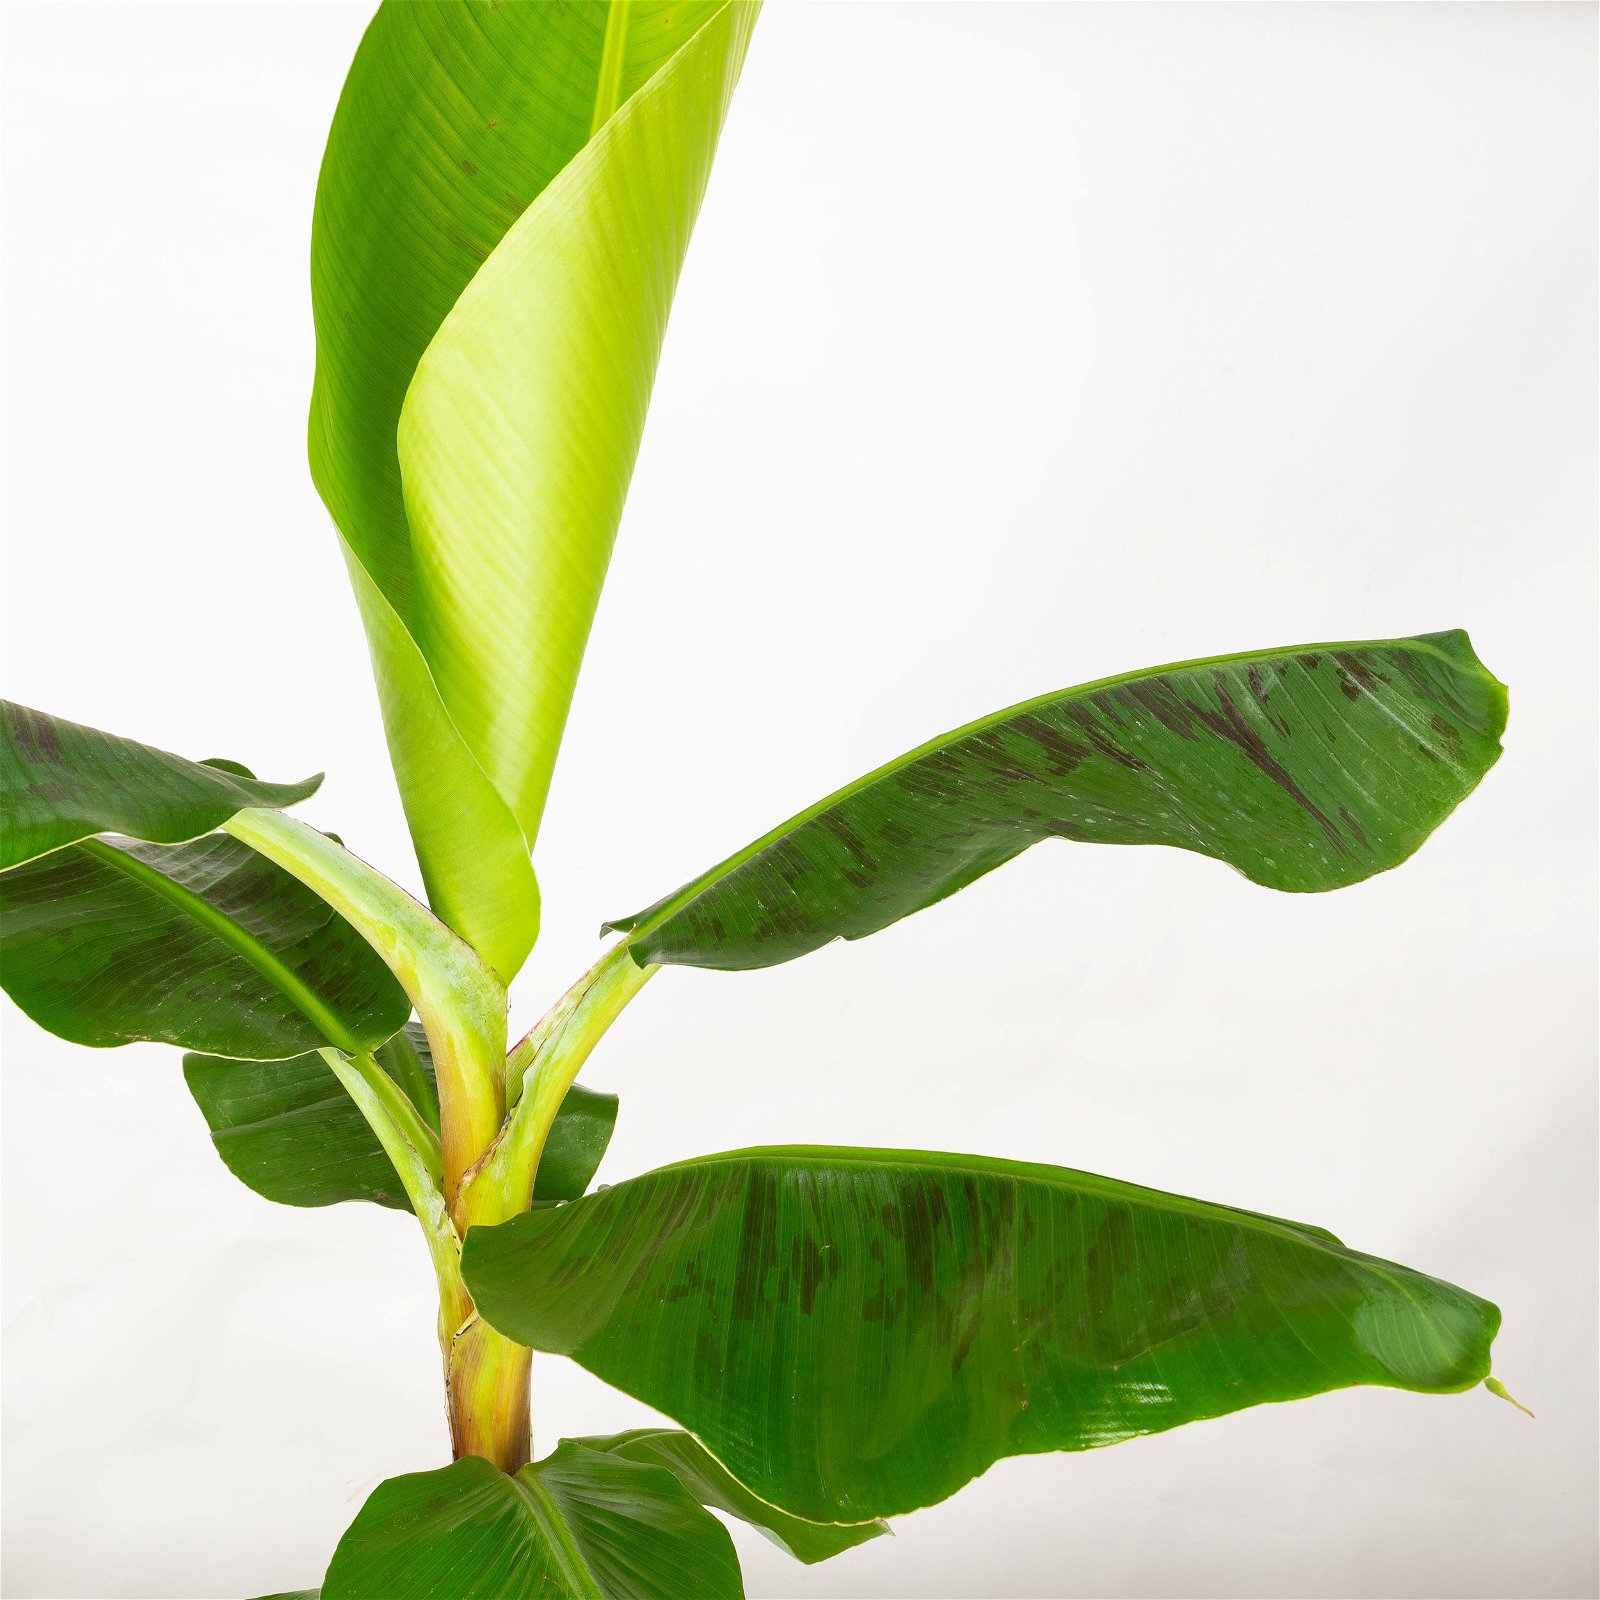 Bananenpflanze 'Dwarf Cavendish' im Korb Gaby, Topf-Ø 21 cm, H: ca. 60-80 cm